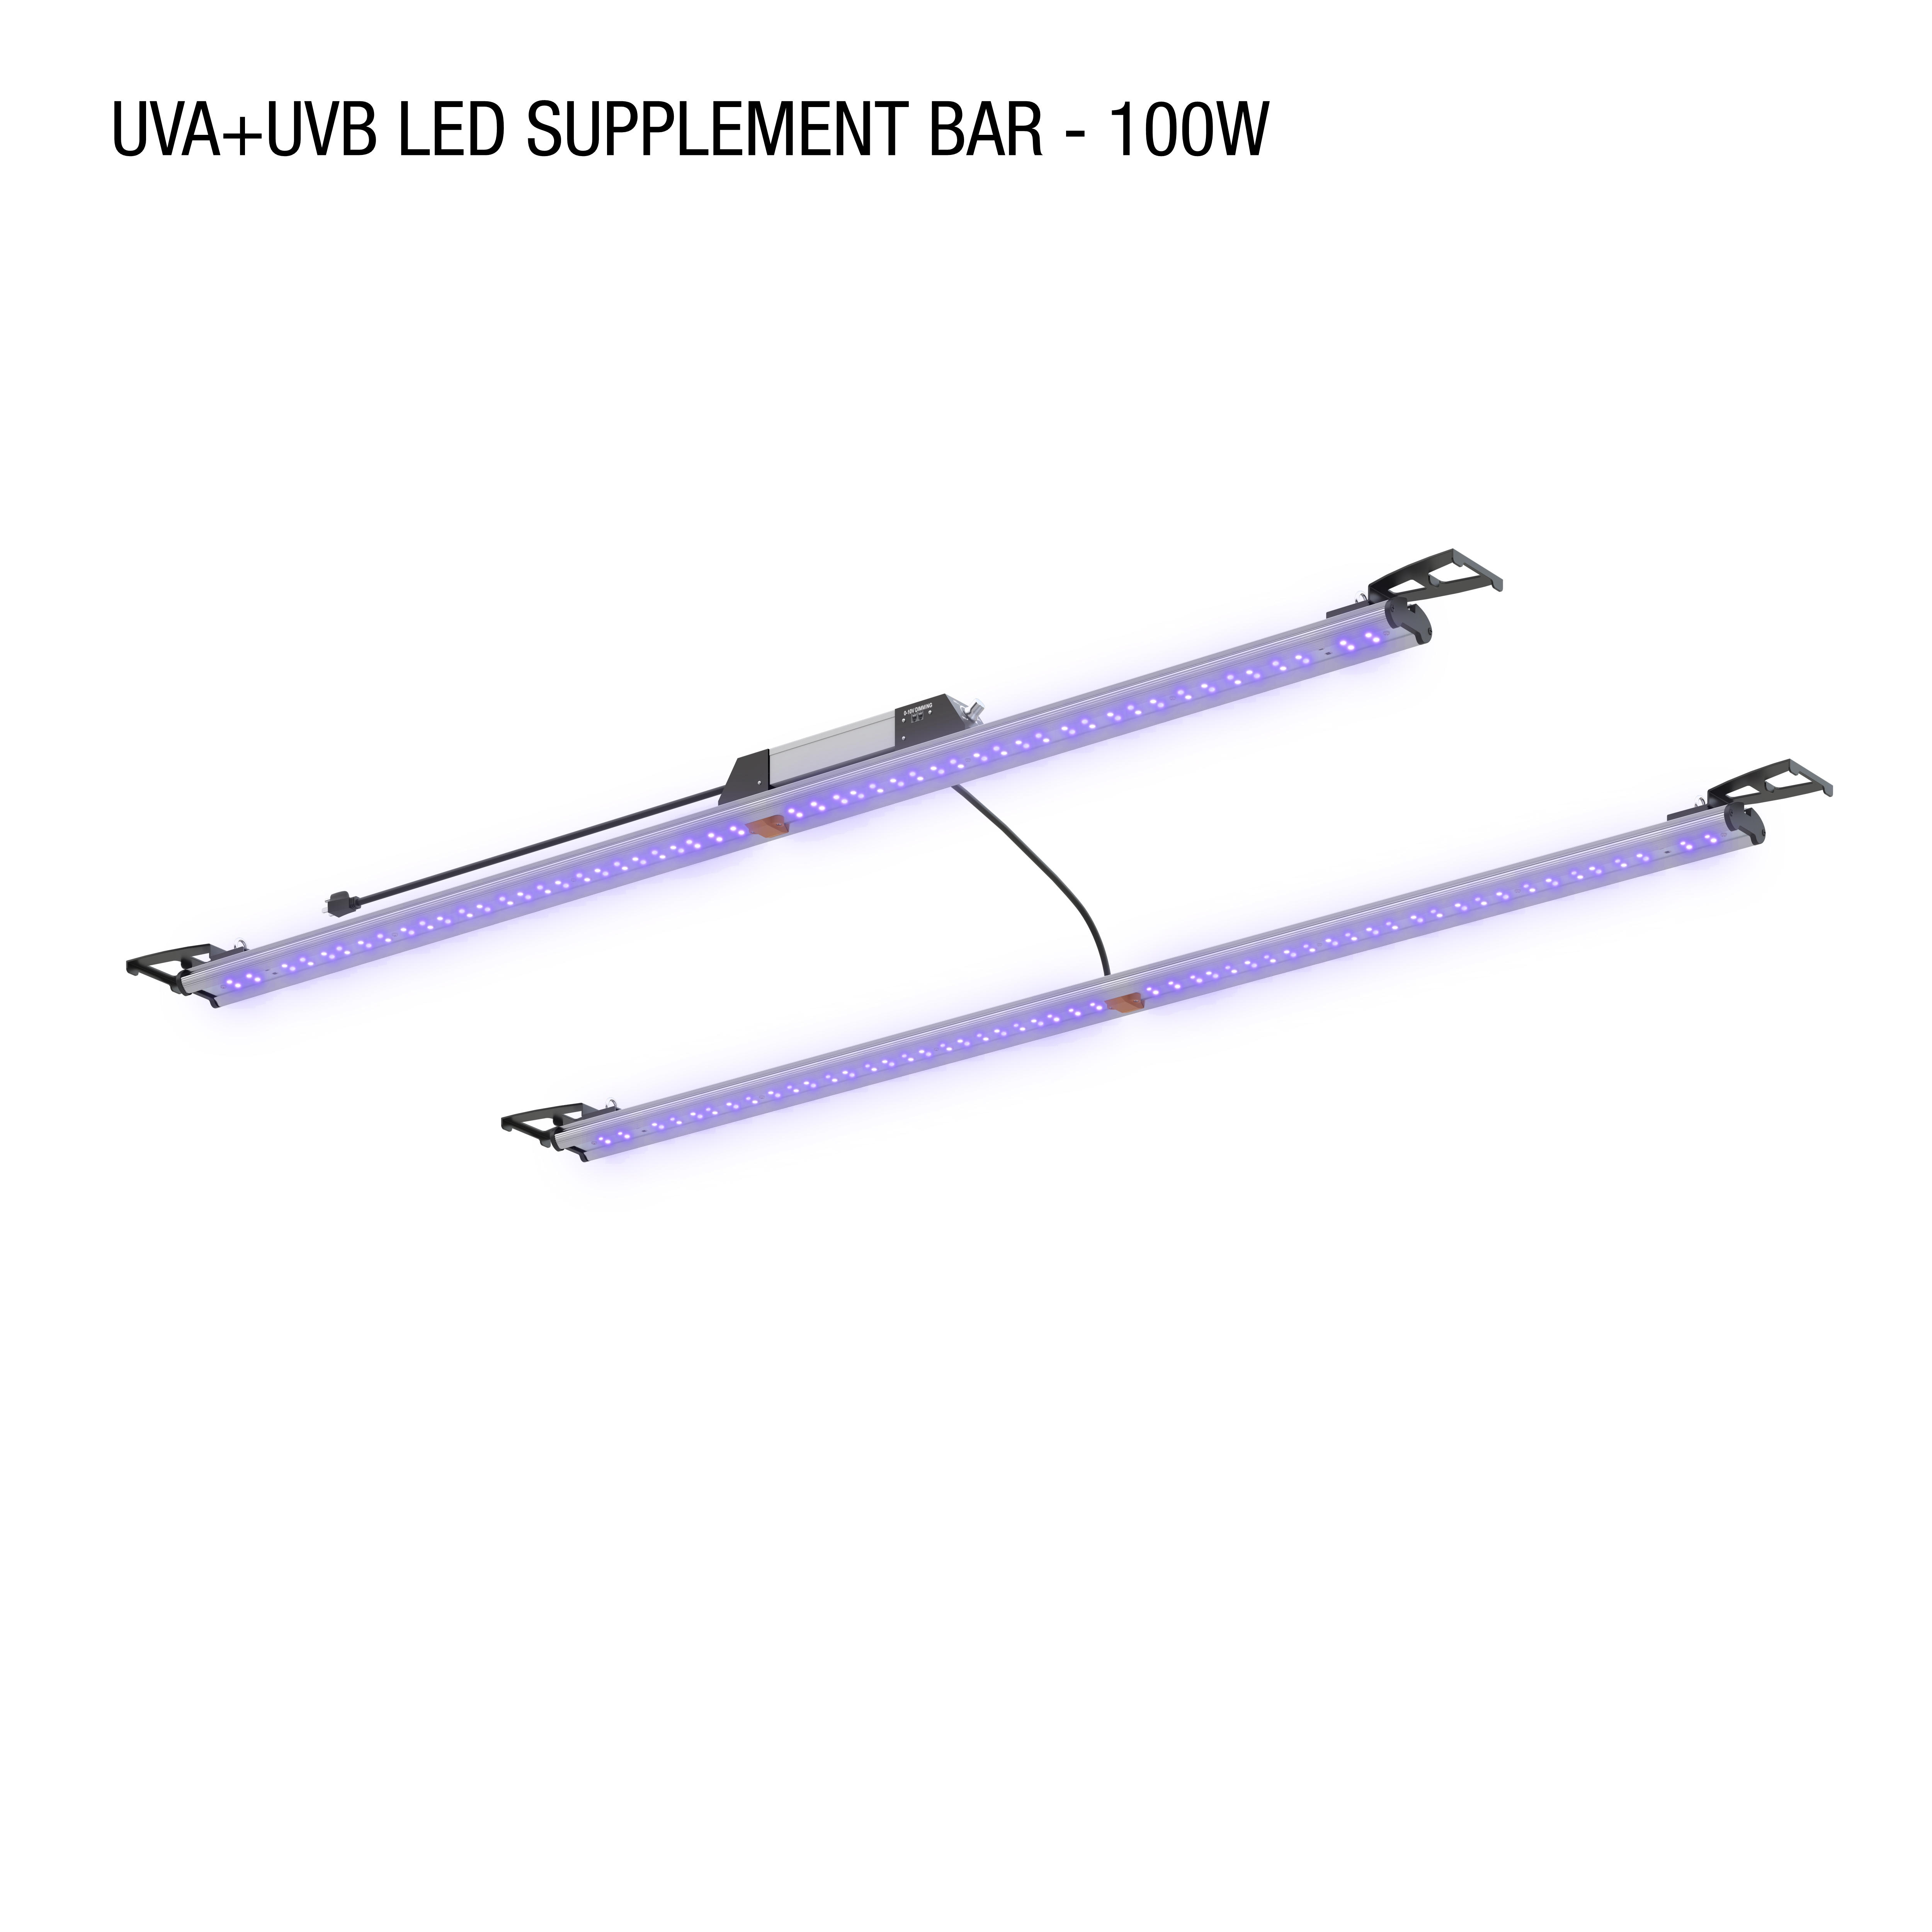 UVA+UVB Supplemental Spectrum Light bar - 100W